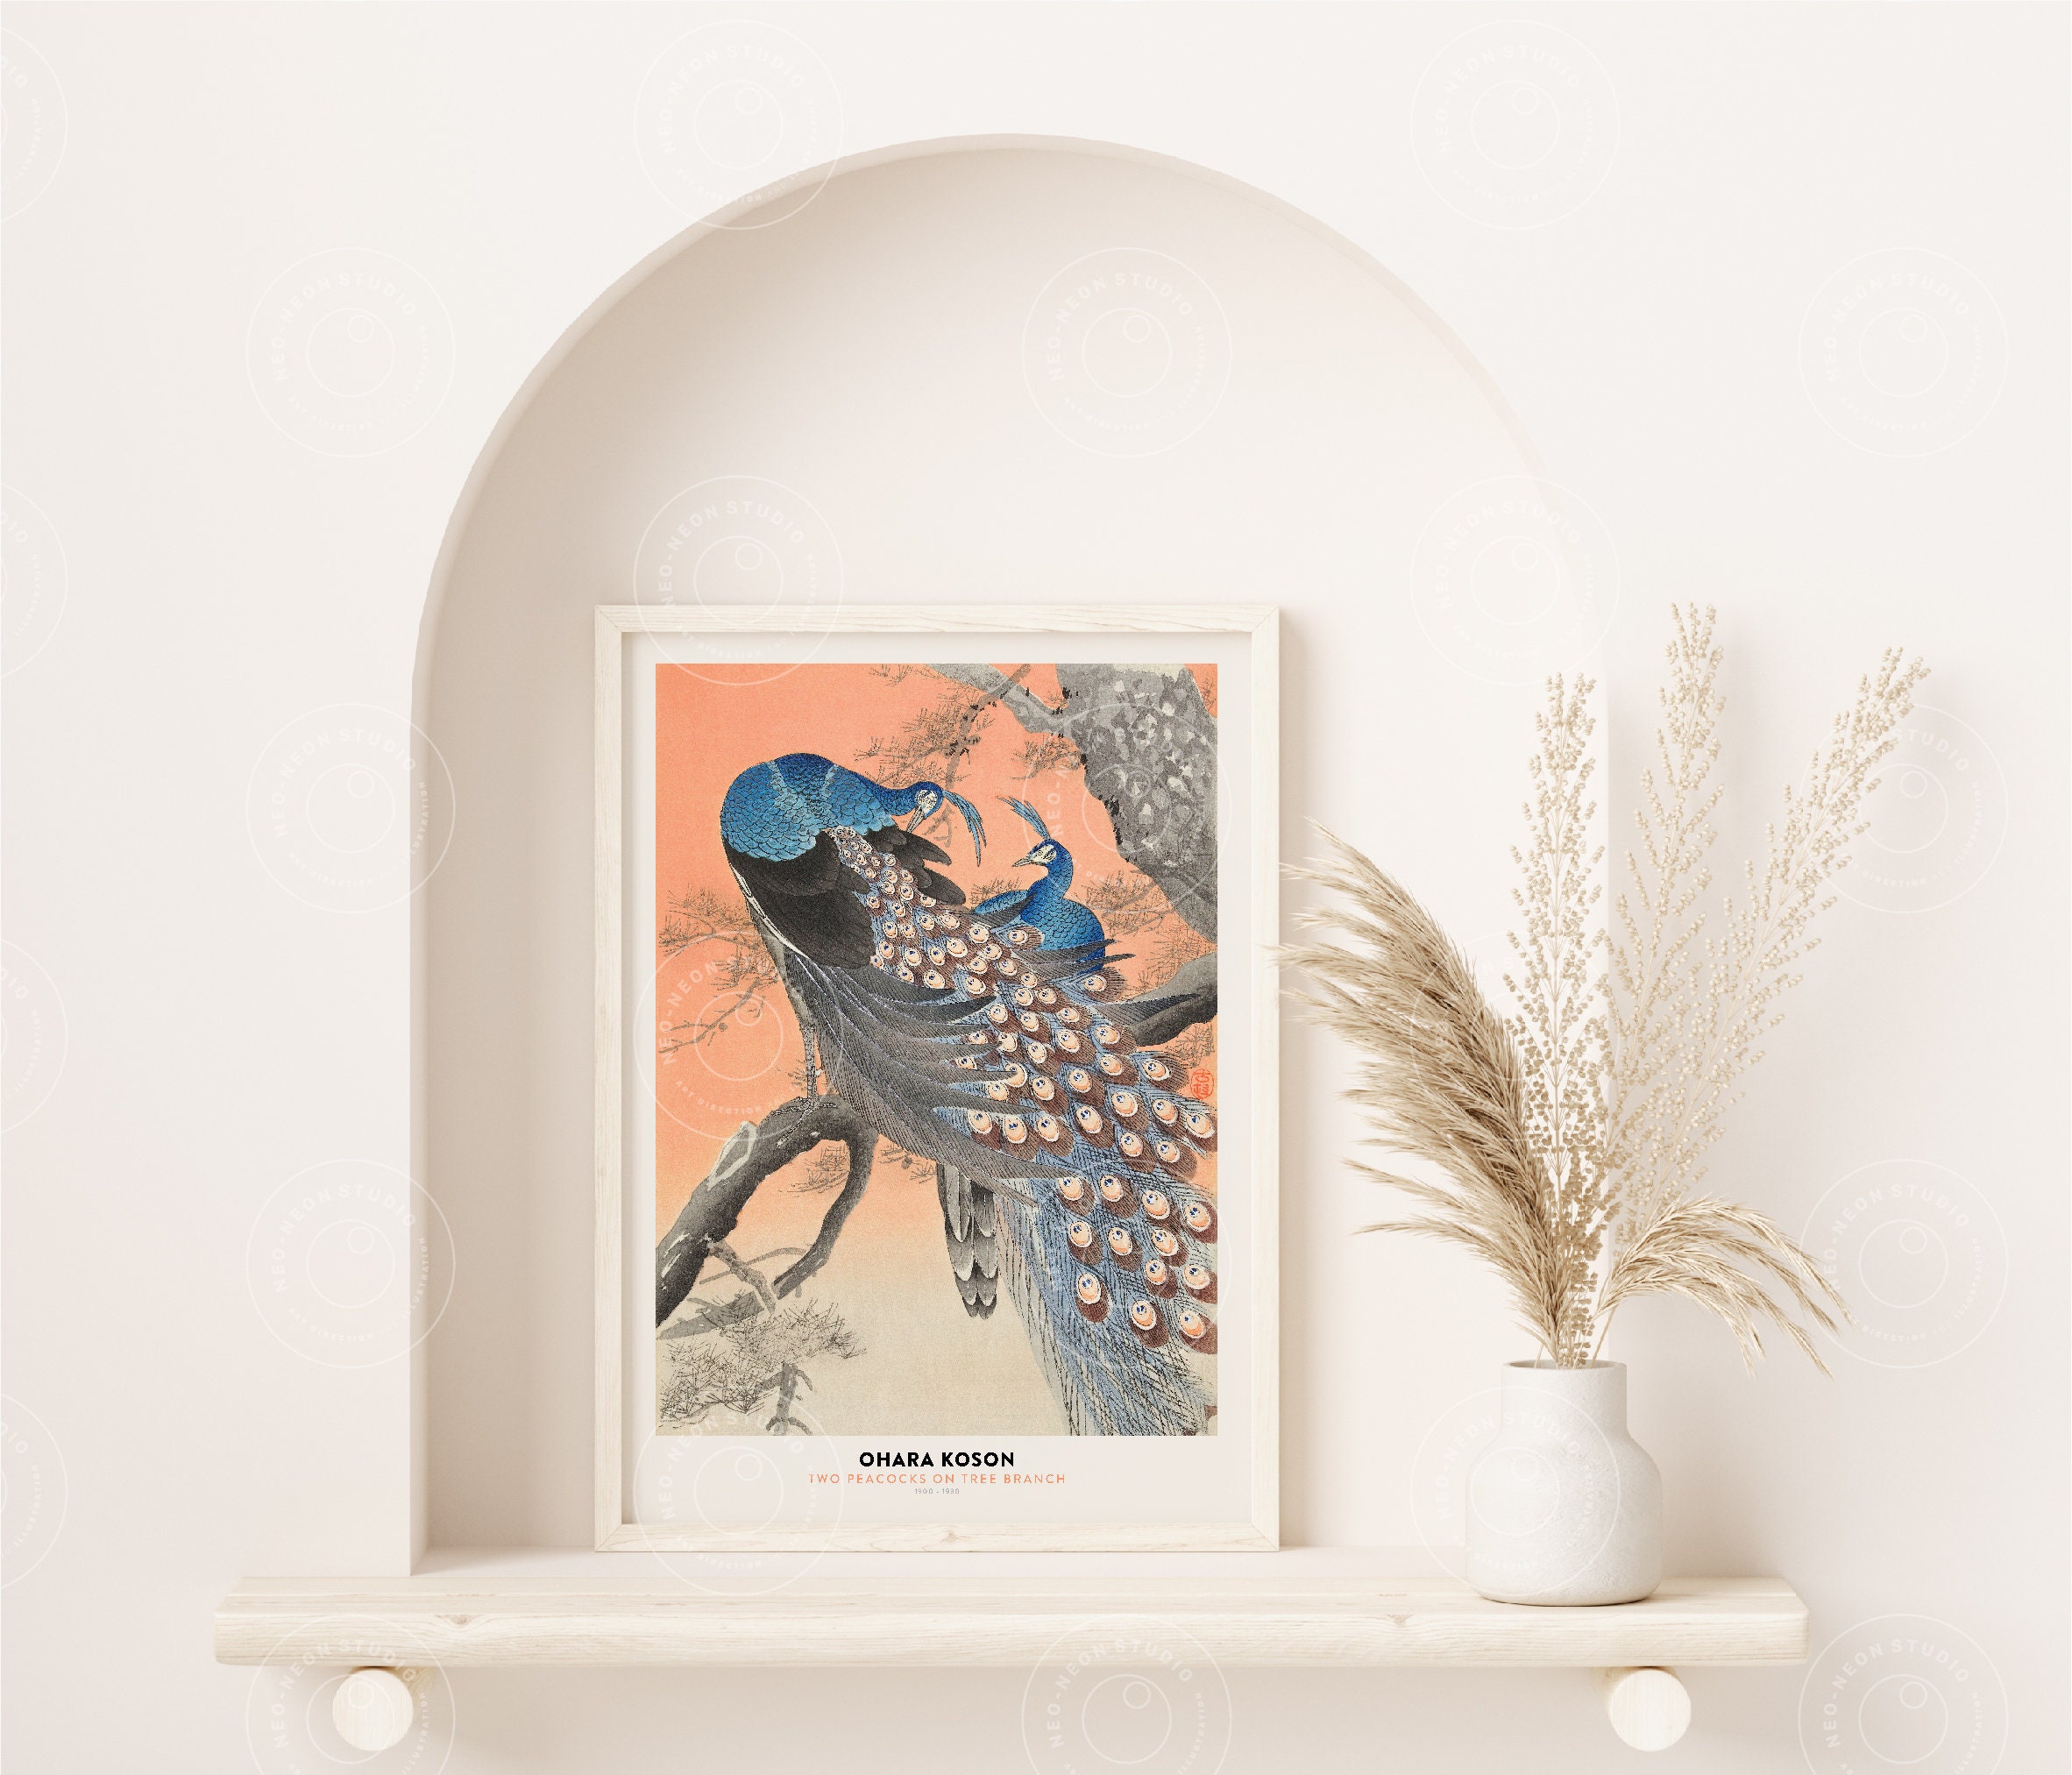 Japanese Art, Katsushika Hokusai Print, Cherry Blossom Art, Japanese Art  Print, Japanese Print, Japanese Wall Art, Famous Japanese Art A3 A4 